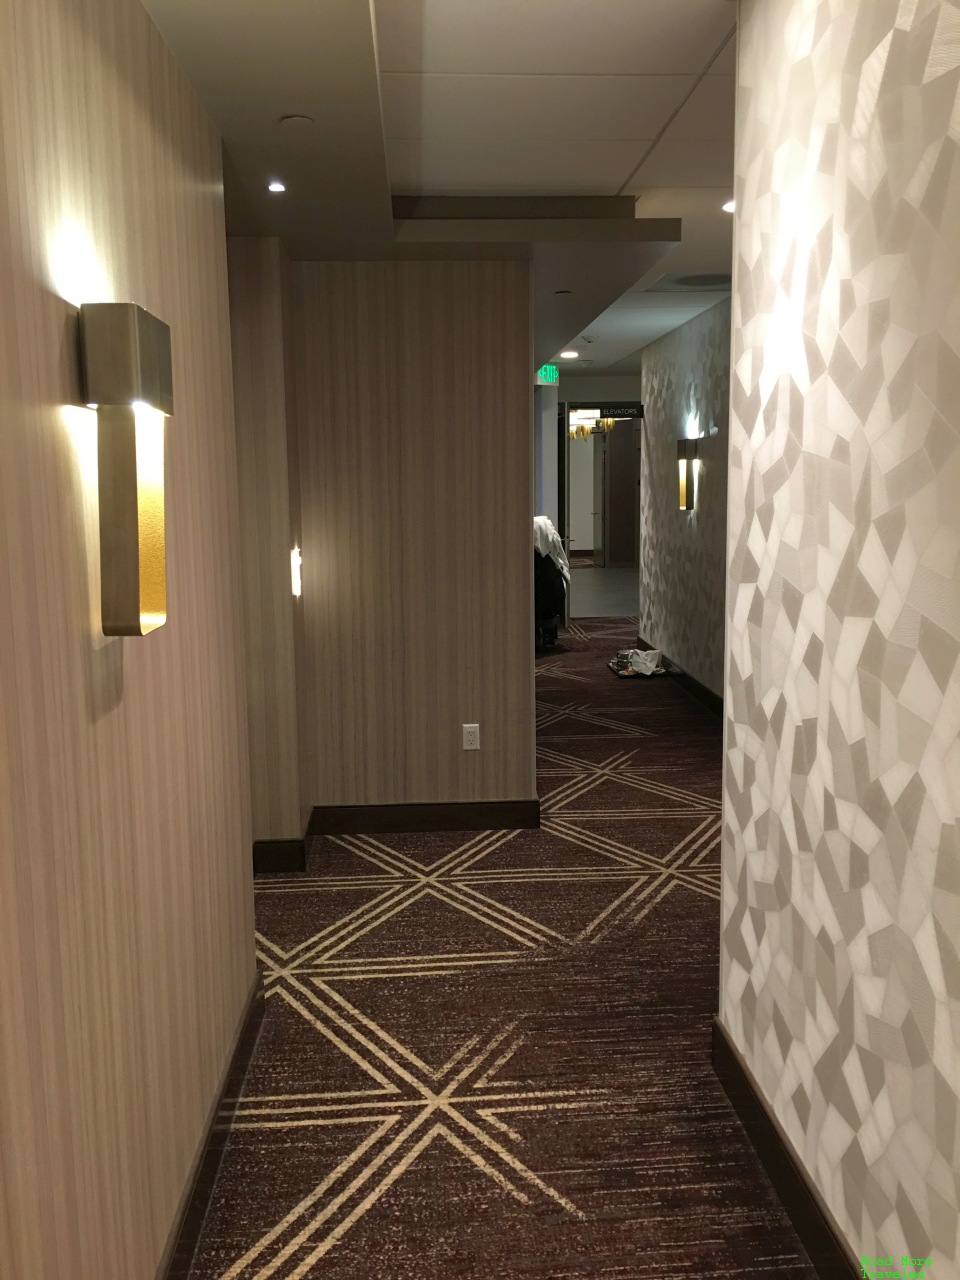 H Hotel Los Angeles corridors